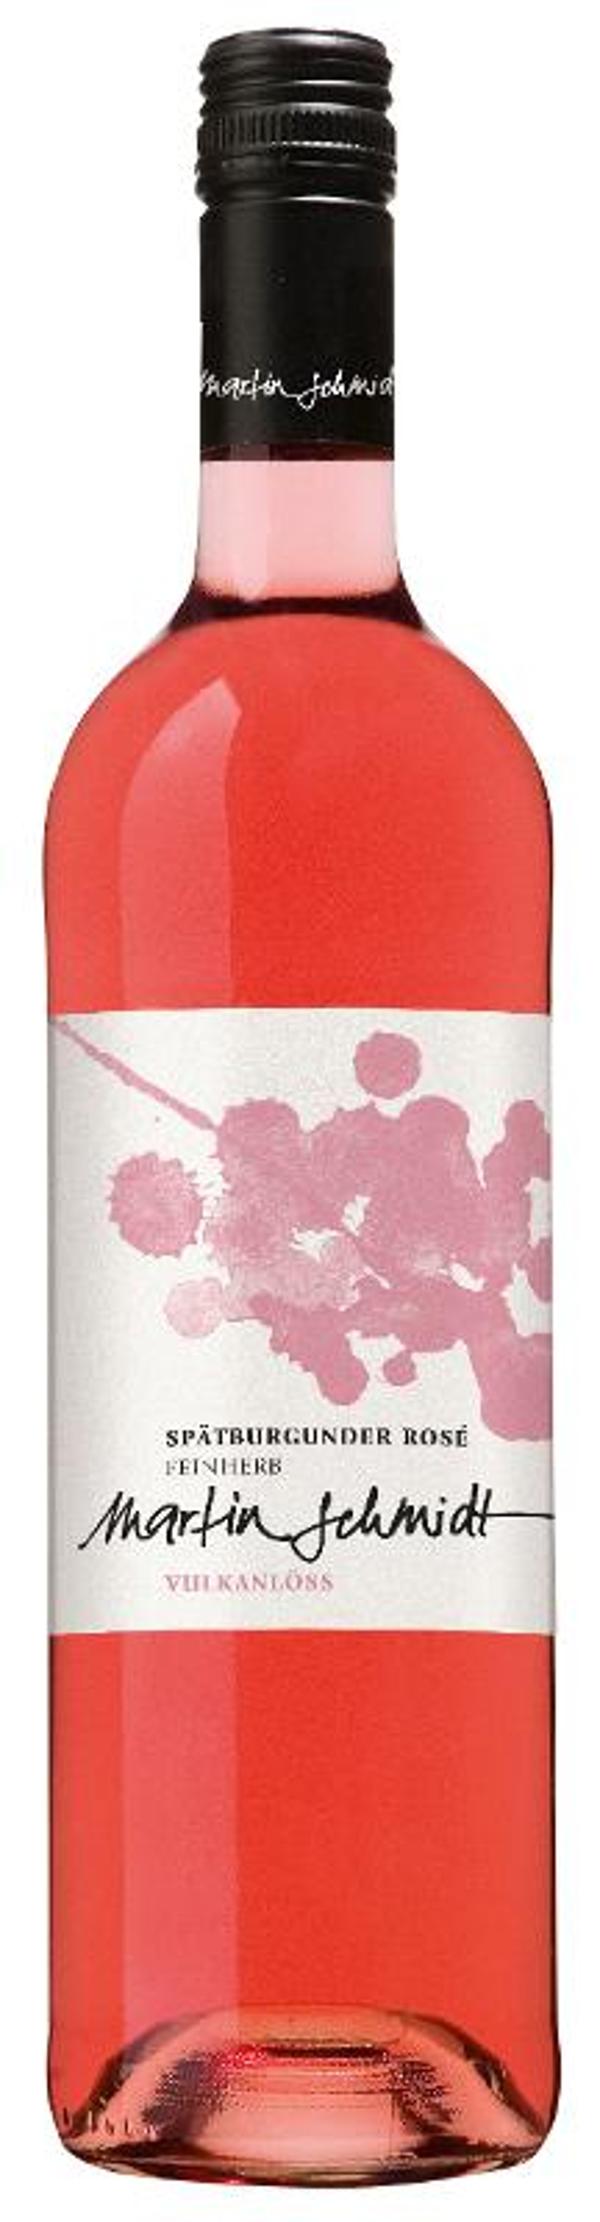 Produktfoto zu Vulkanlöss Spätburgunder Rosé